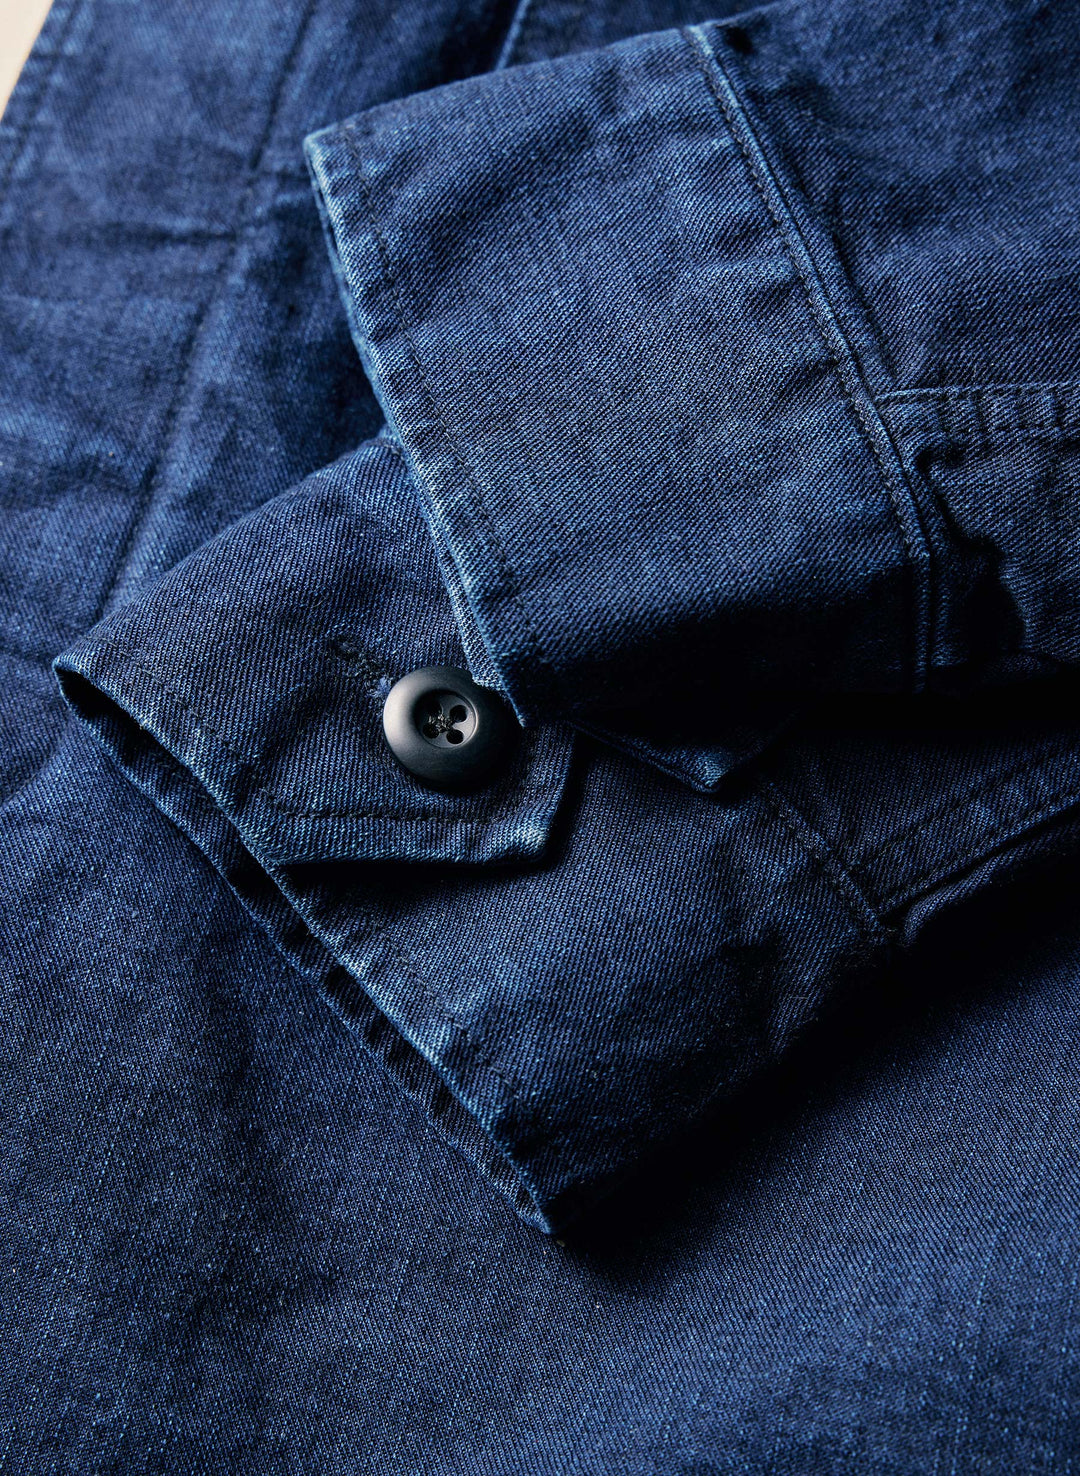 Jeans, Outerwear, Textile, Sleeve, Grey, Collar, Denim, Electric blue, Pattern, Button